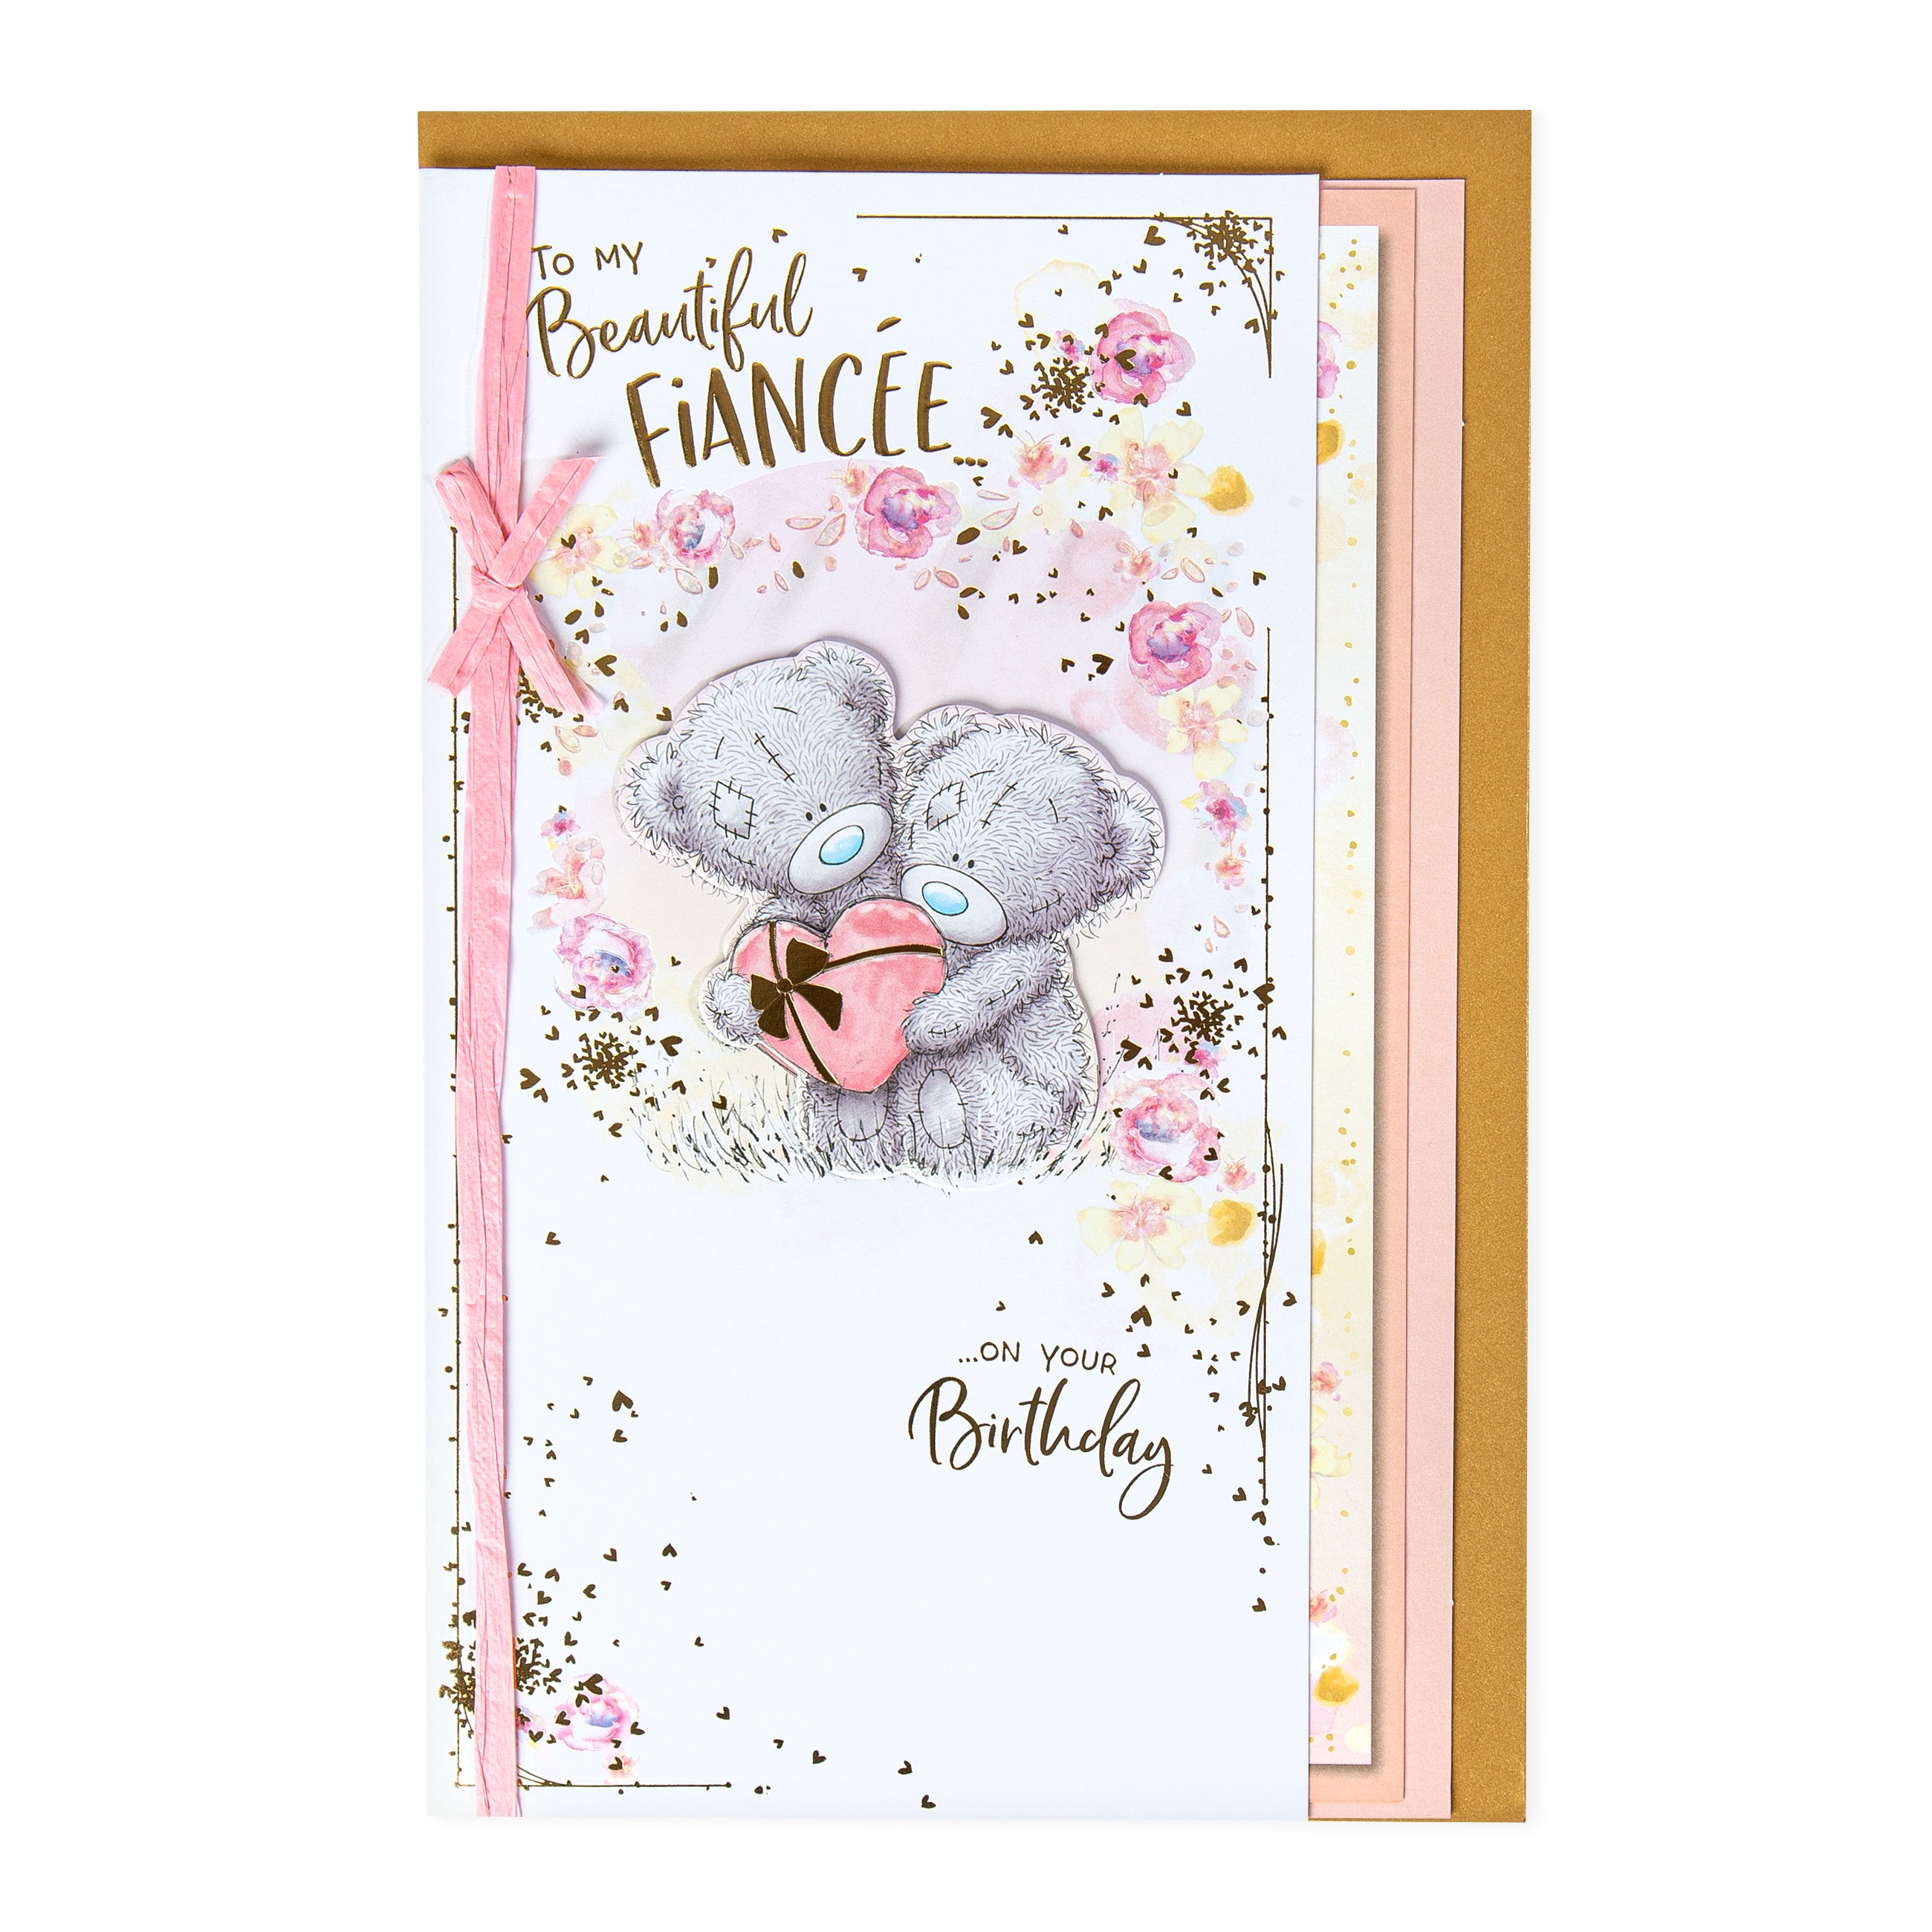 To My Beautiful Fiancee on Your Birthday Card - Bears Holding Heart